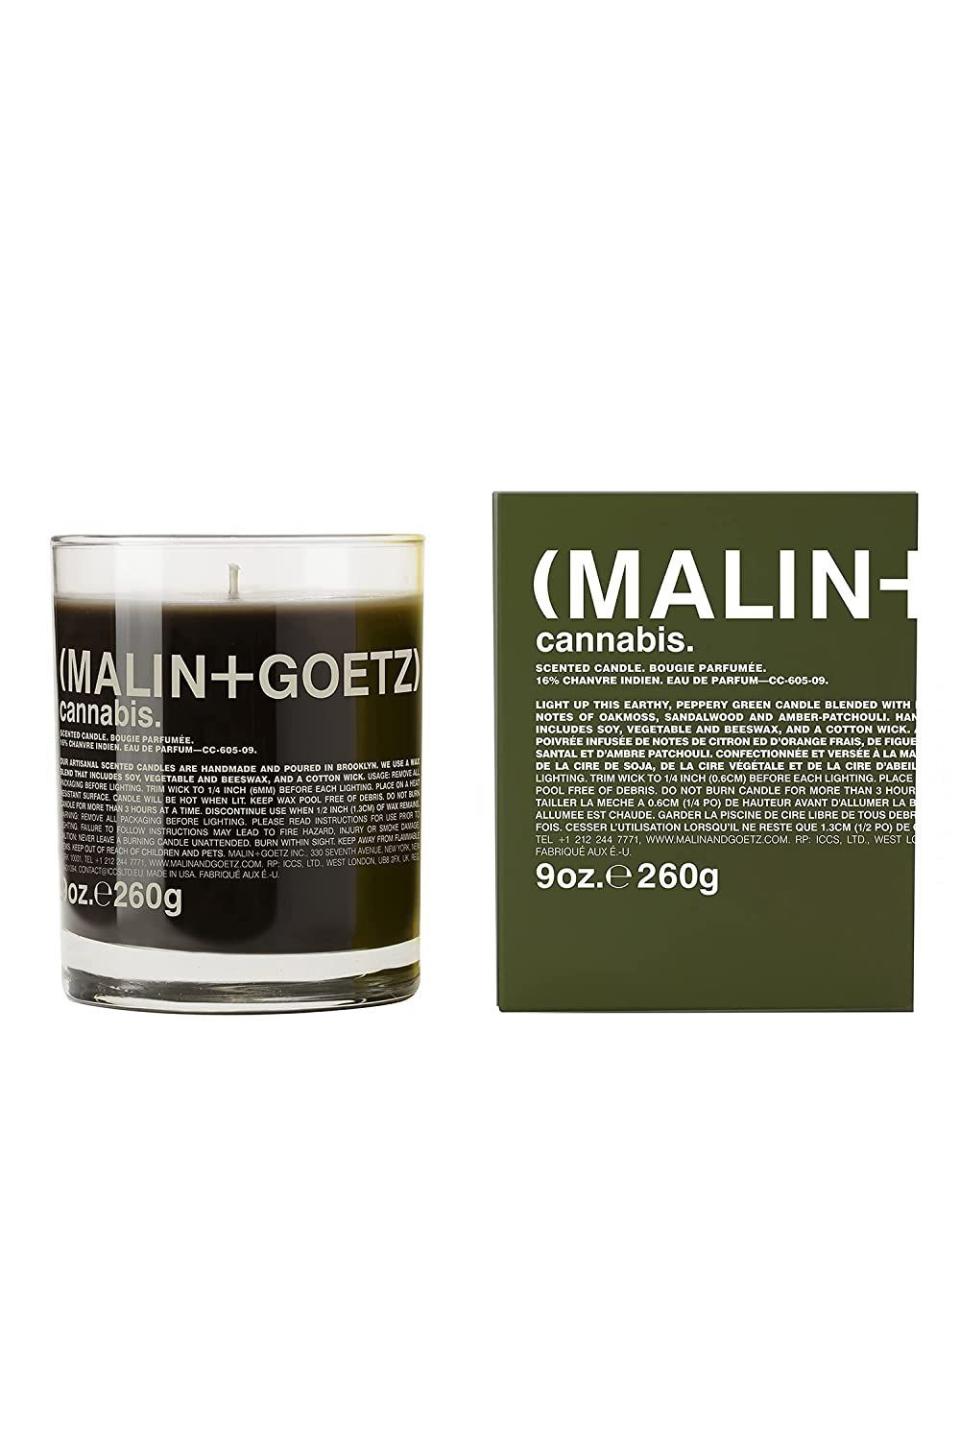 6) Malin + Goetz Cannabis Candle